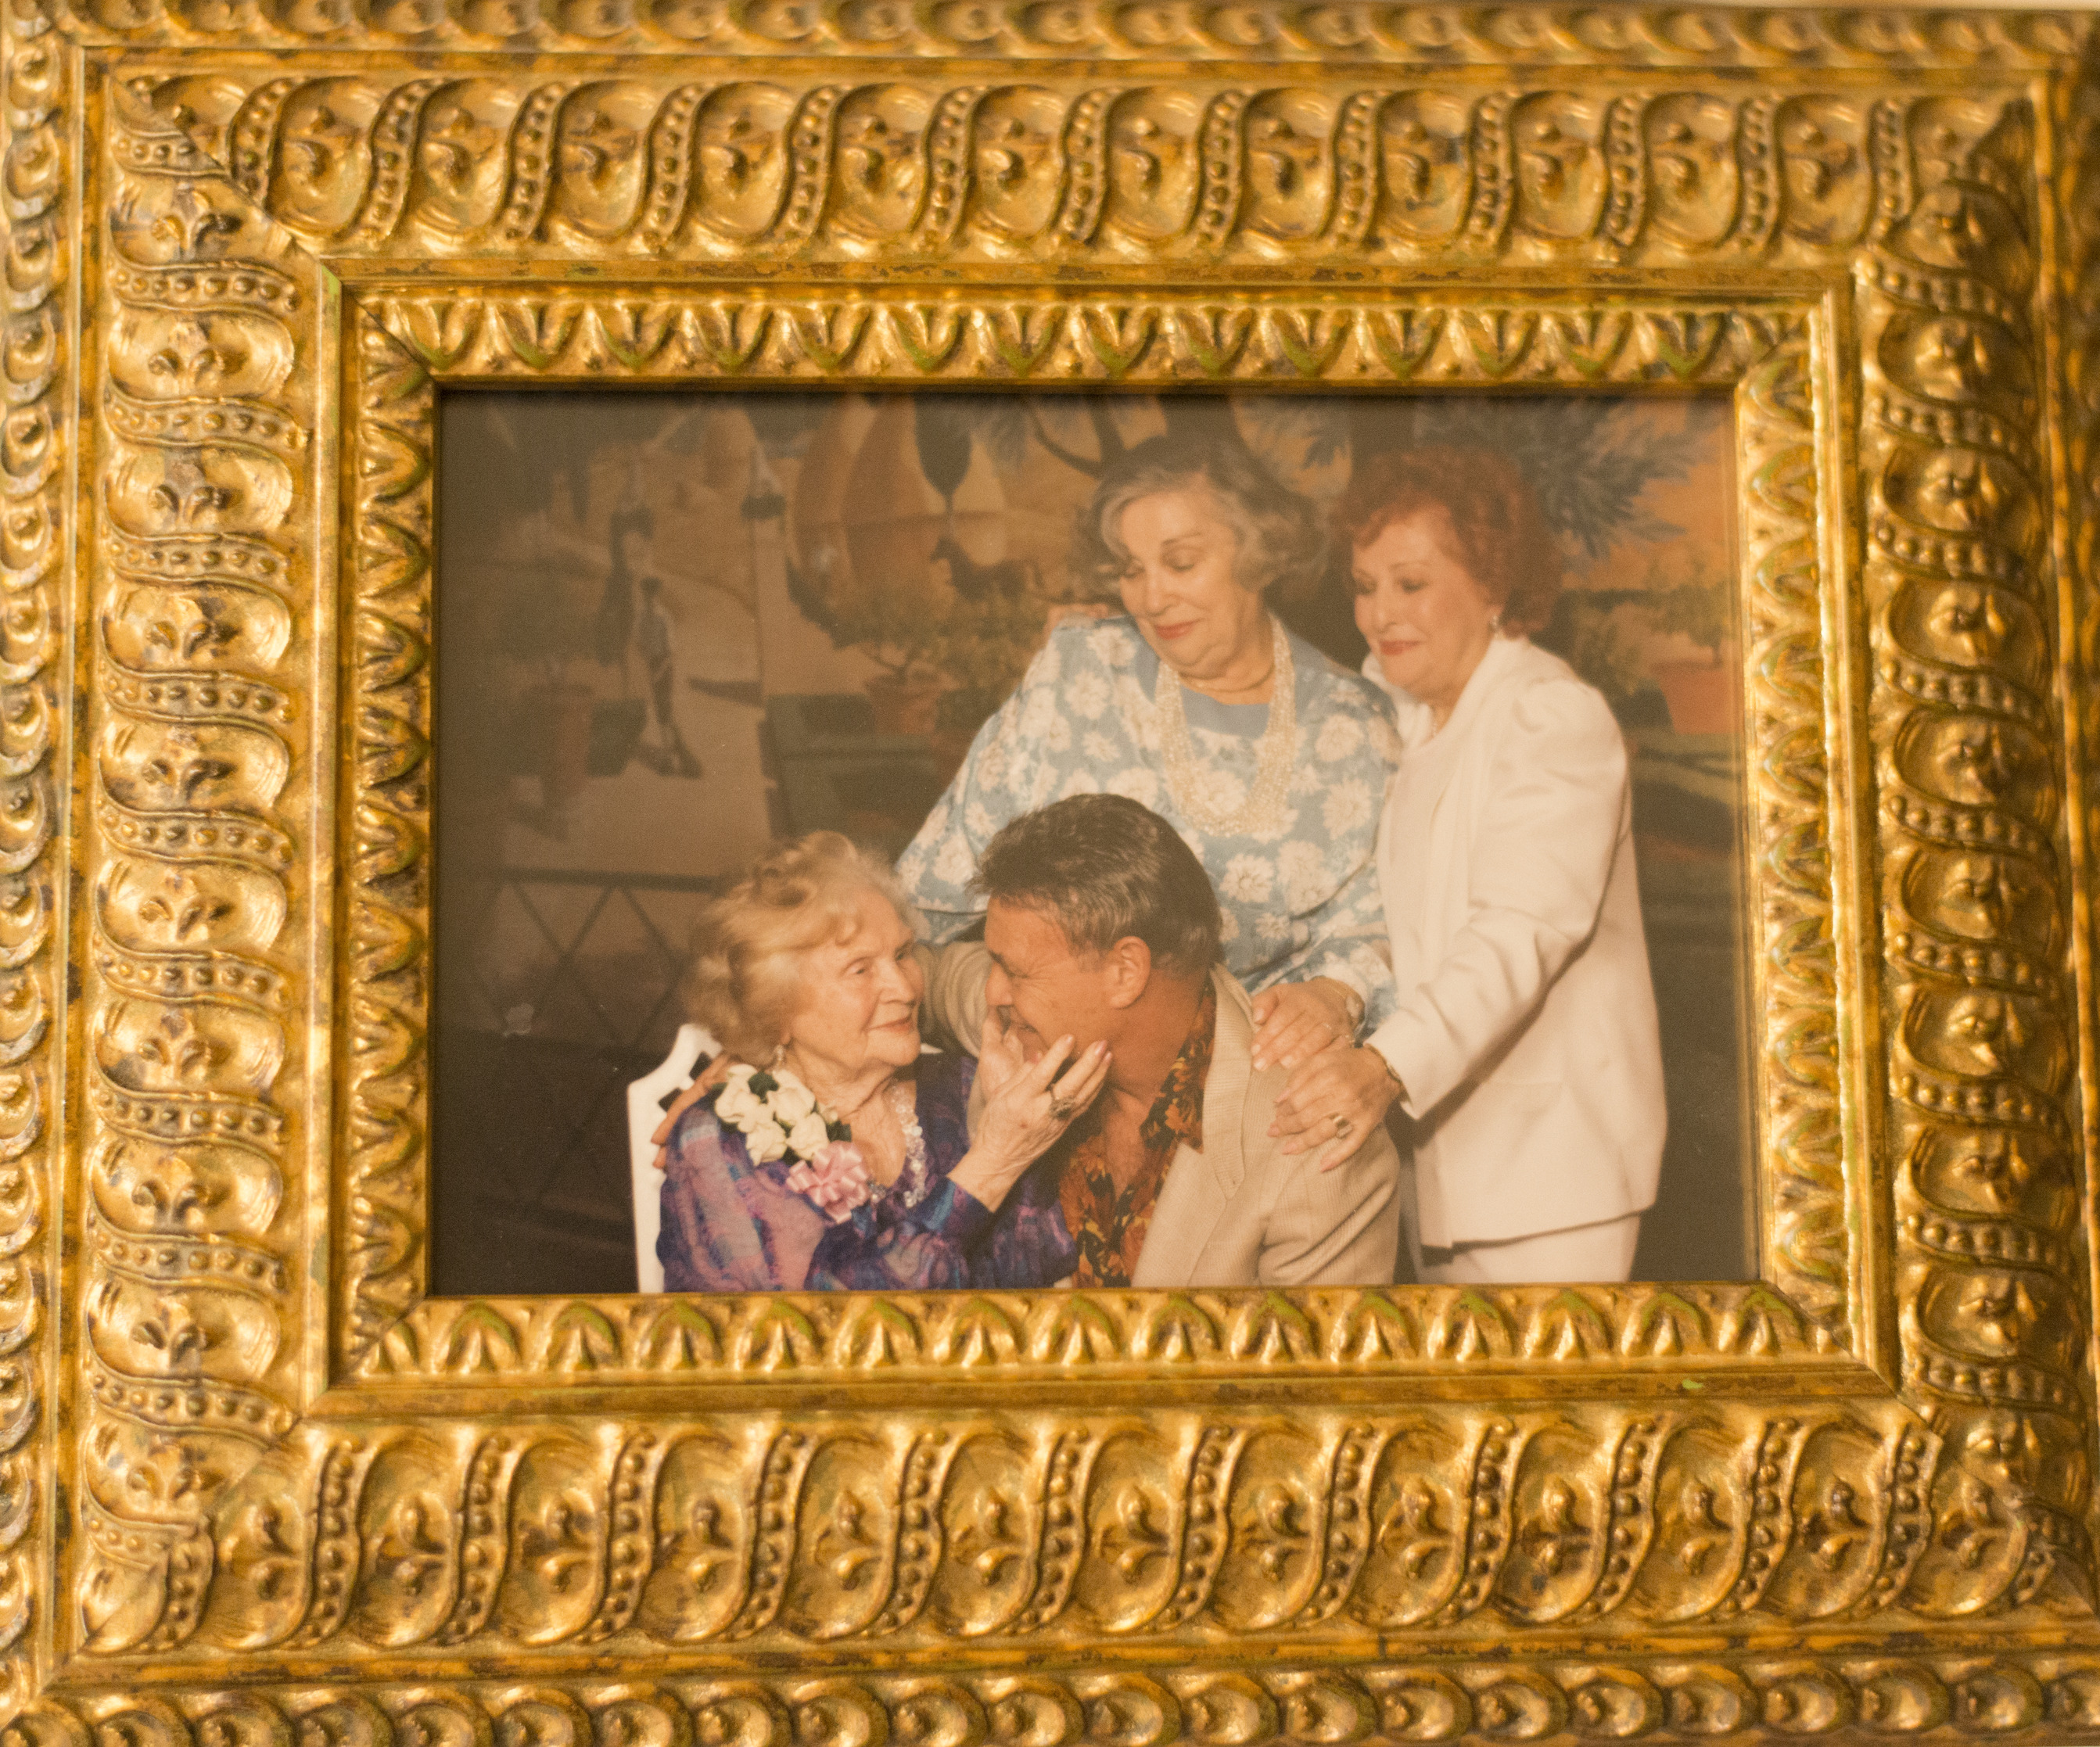 Molasky family photographs, image 8